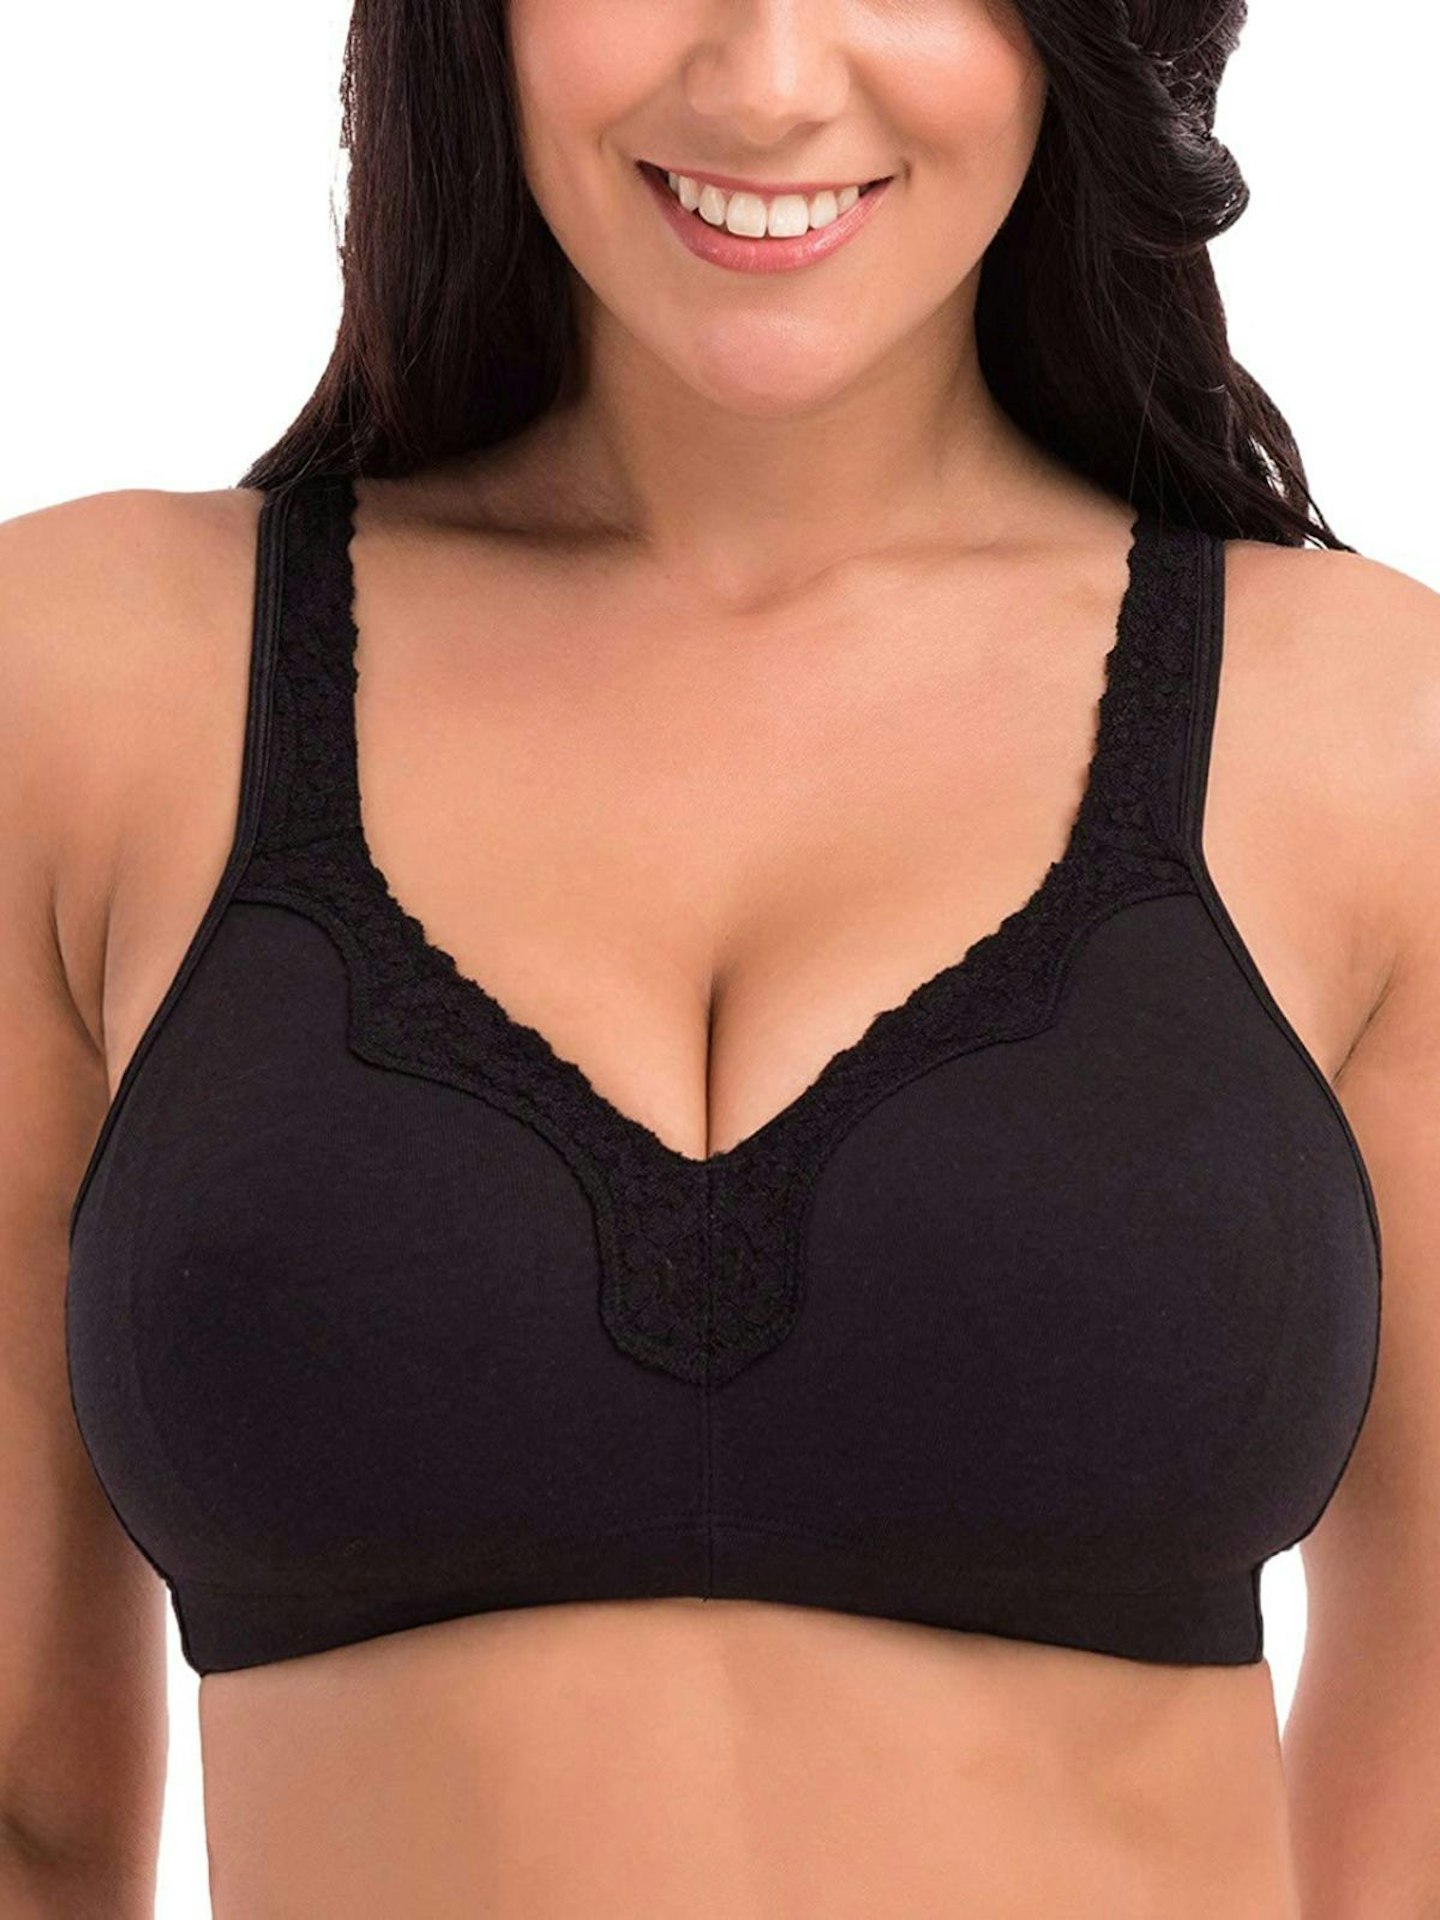 Supportive strapless bra hack✨ Game changer, no? #straplessbra